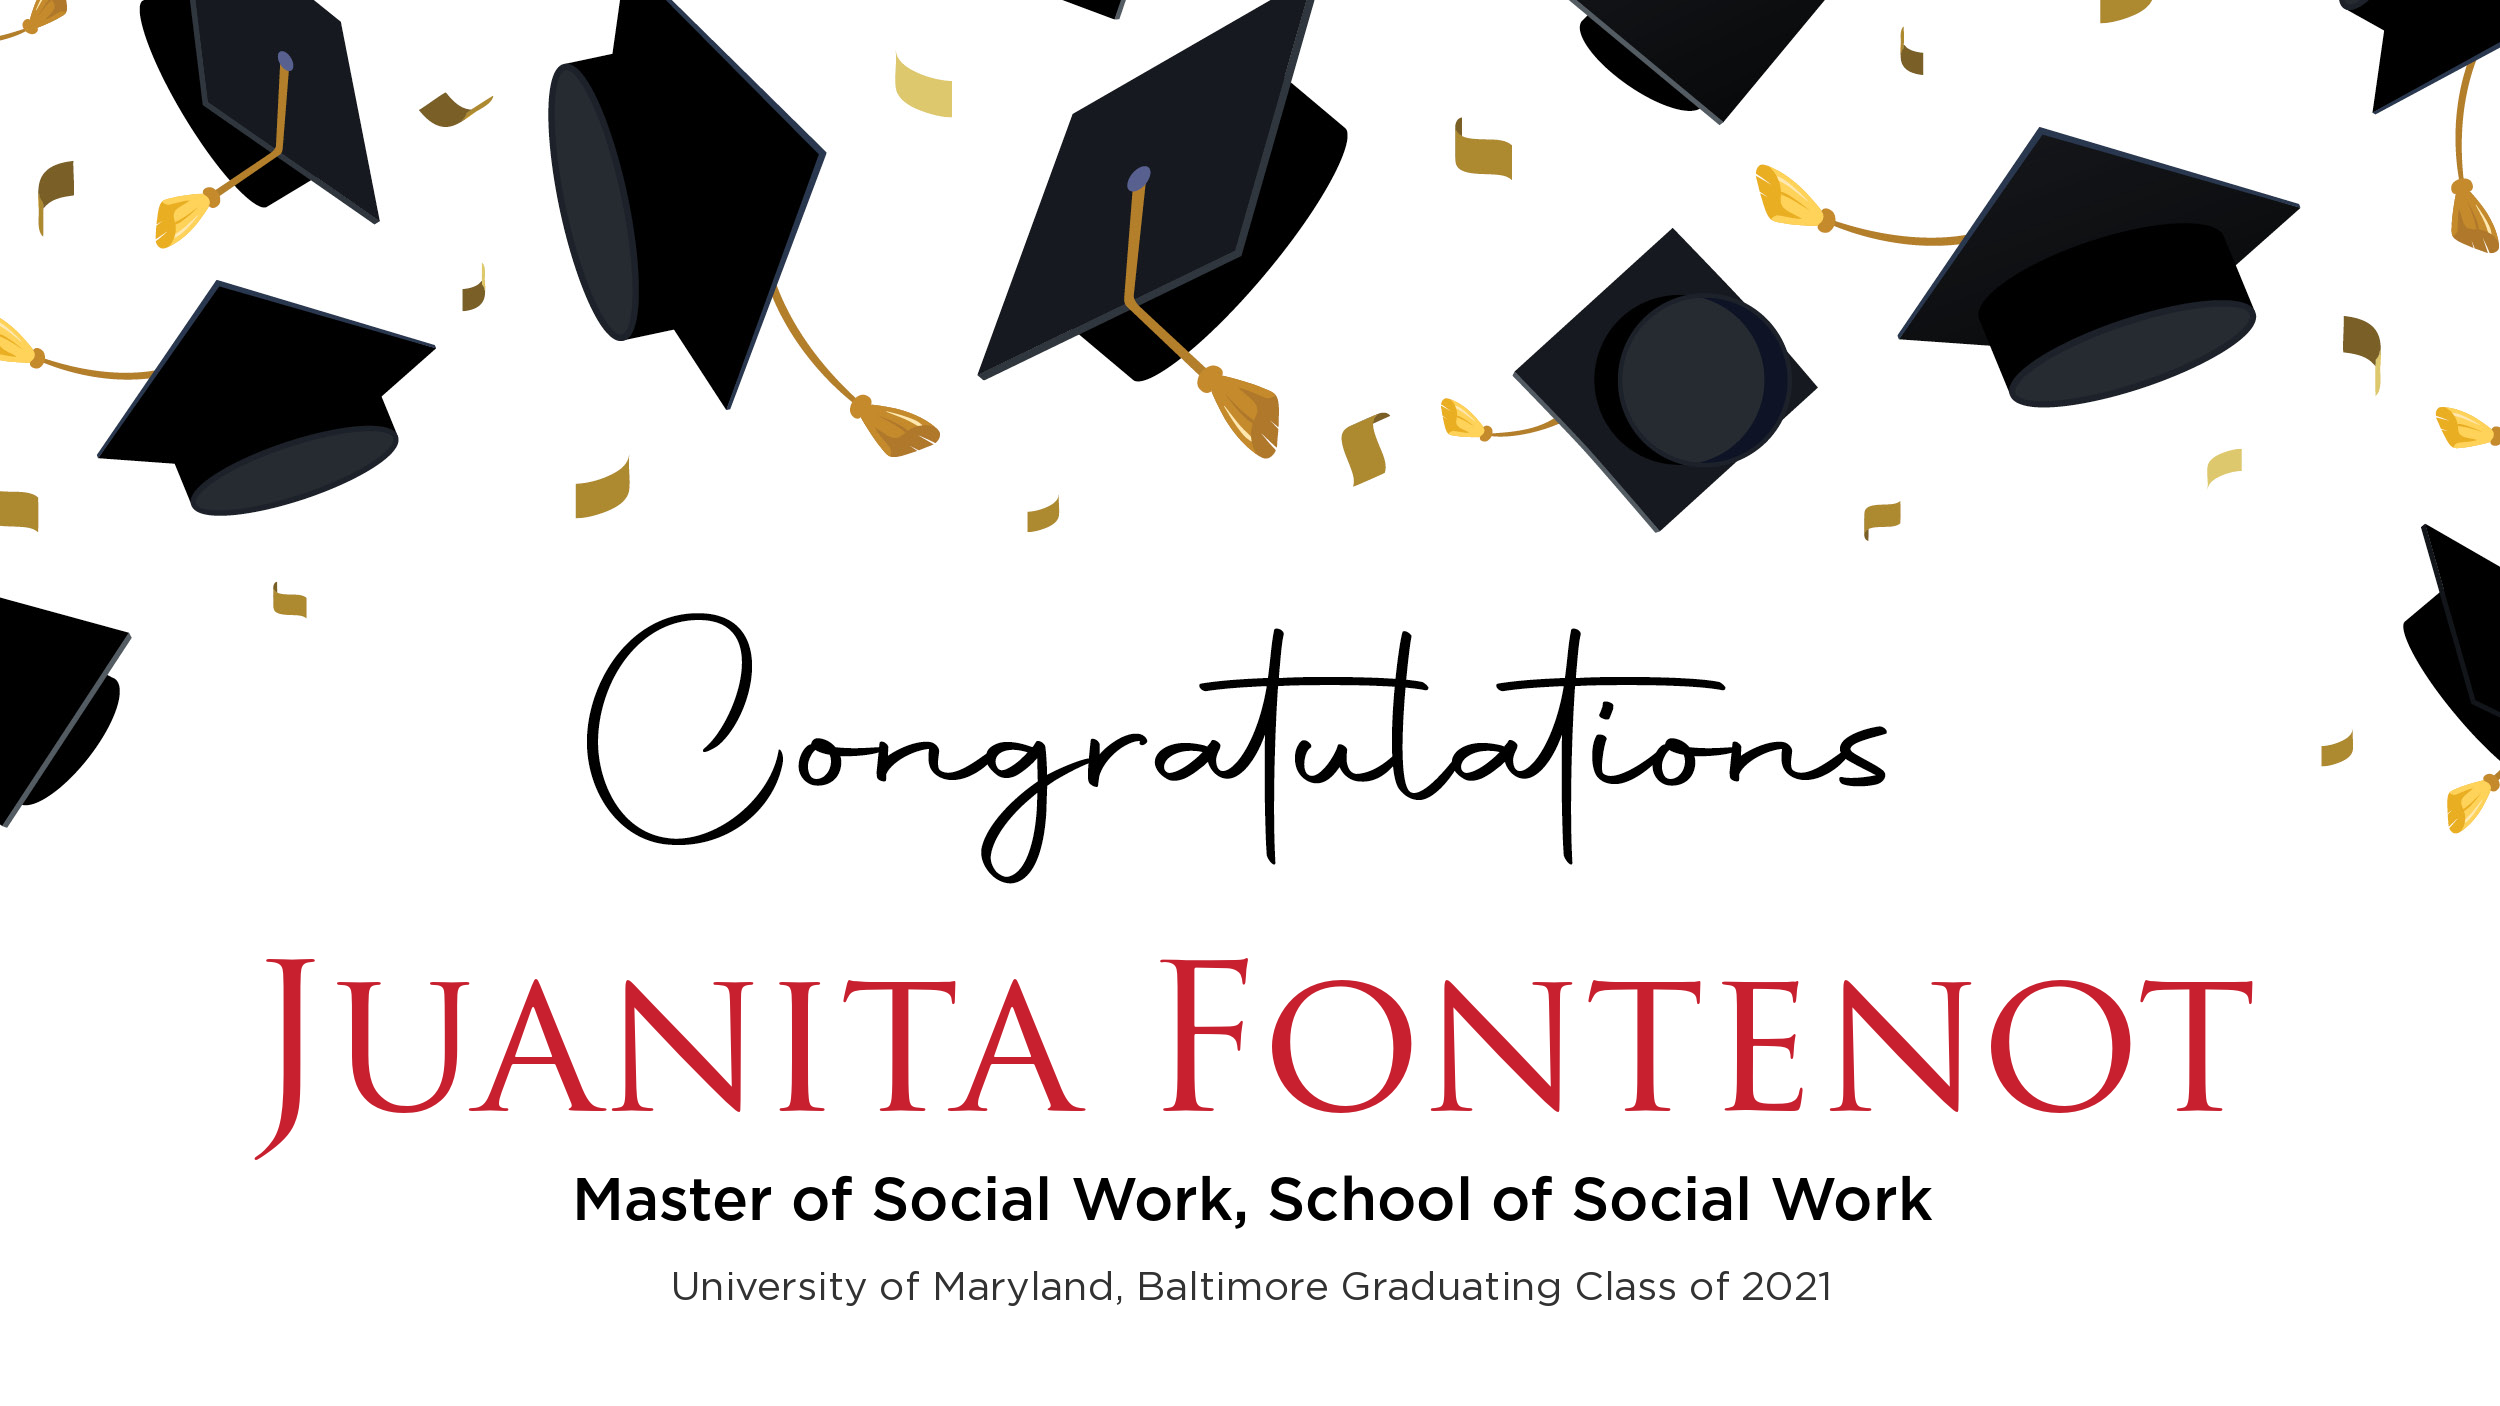 Congratulations Juanita Fontenot, Master of Social Work